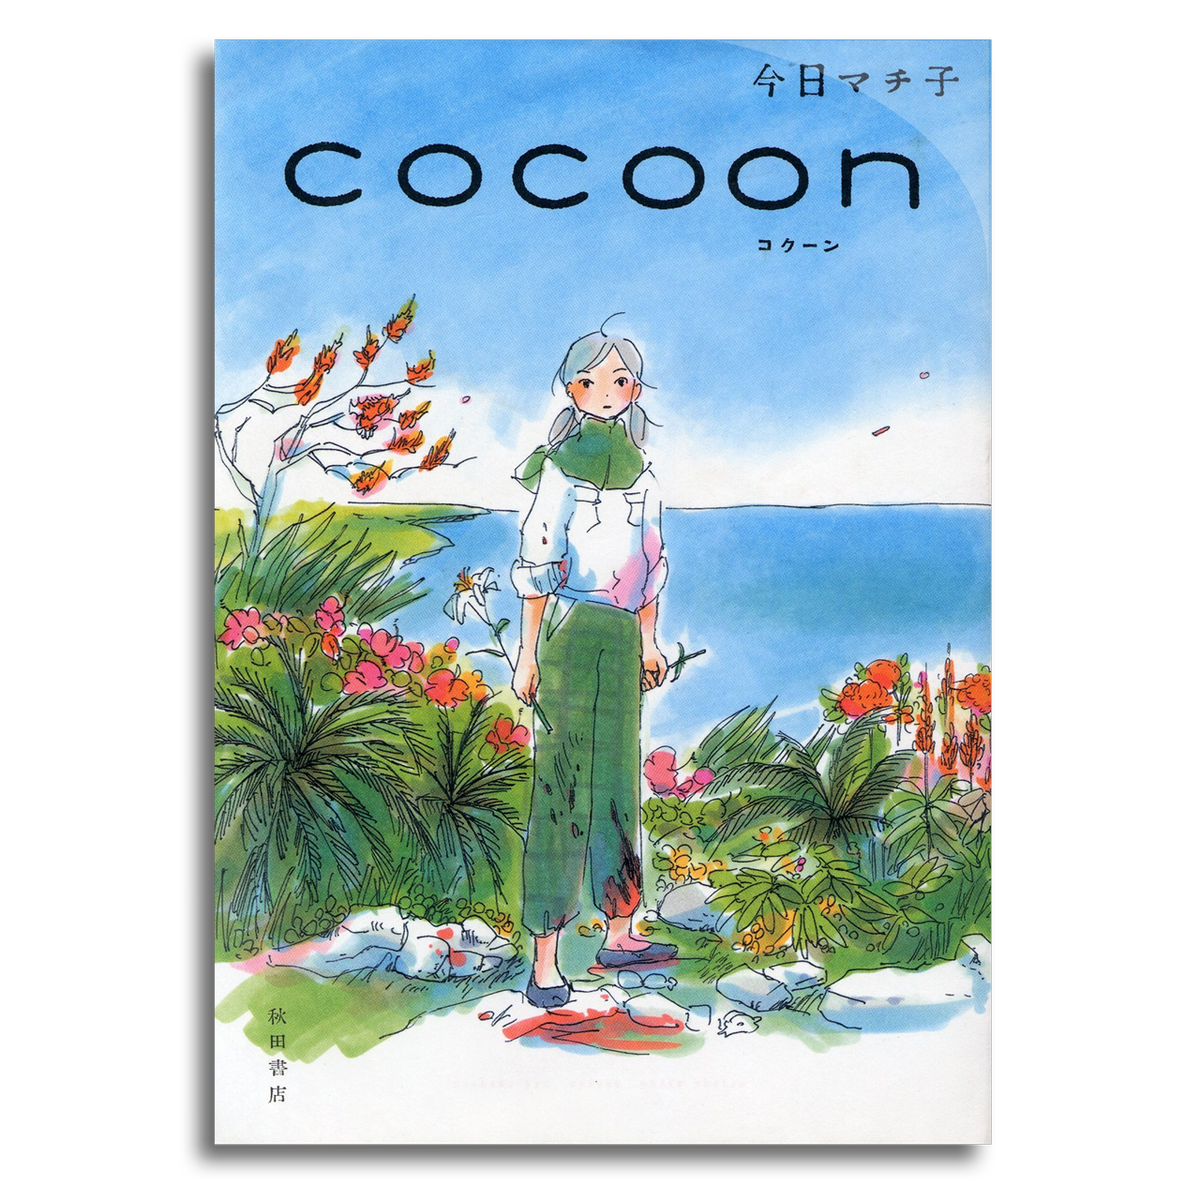 Cocoon 今日マチ子 本屋 Rewind リワインド Online Store 東京 自由が丘